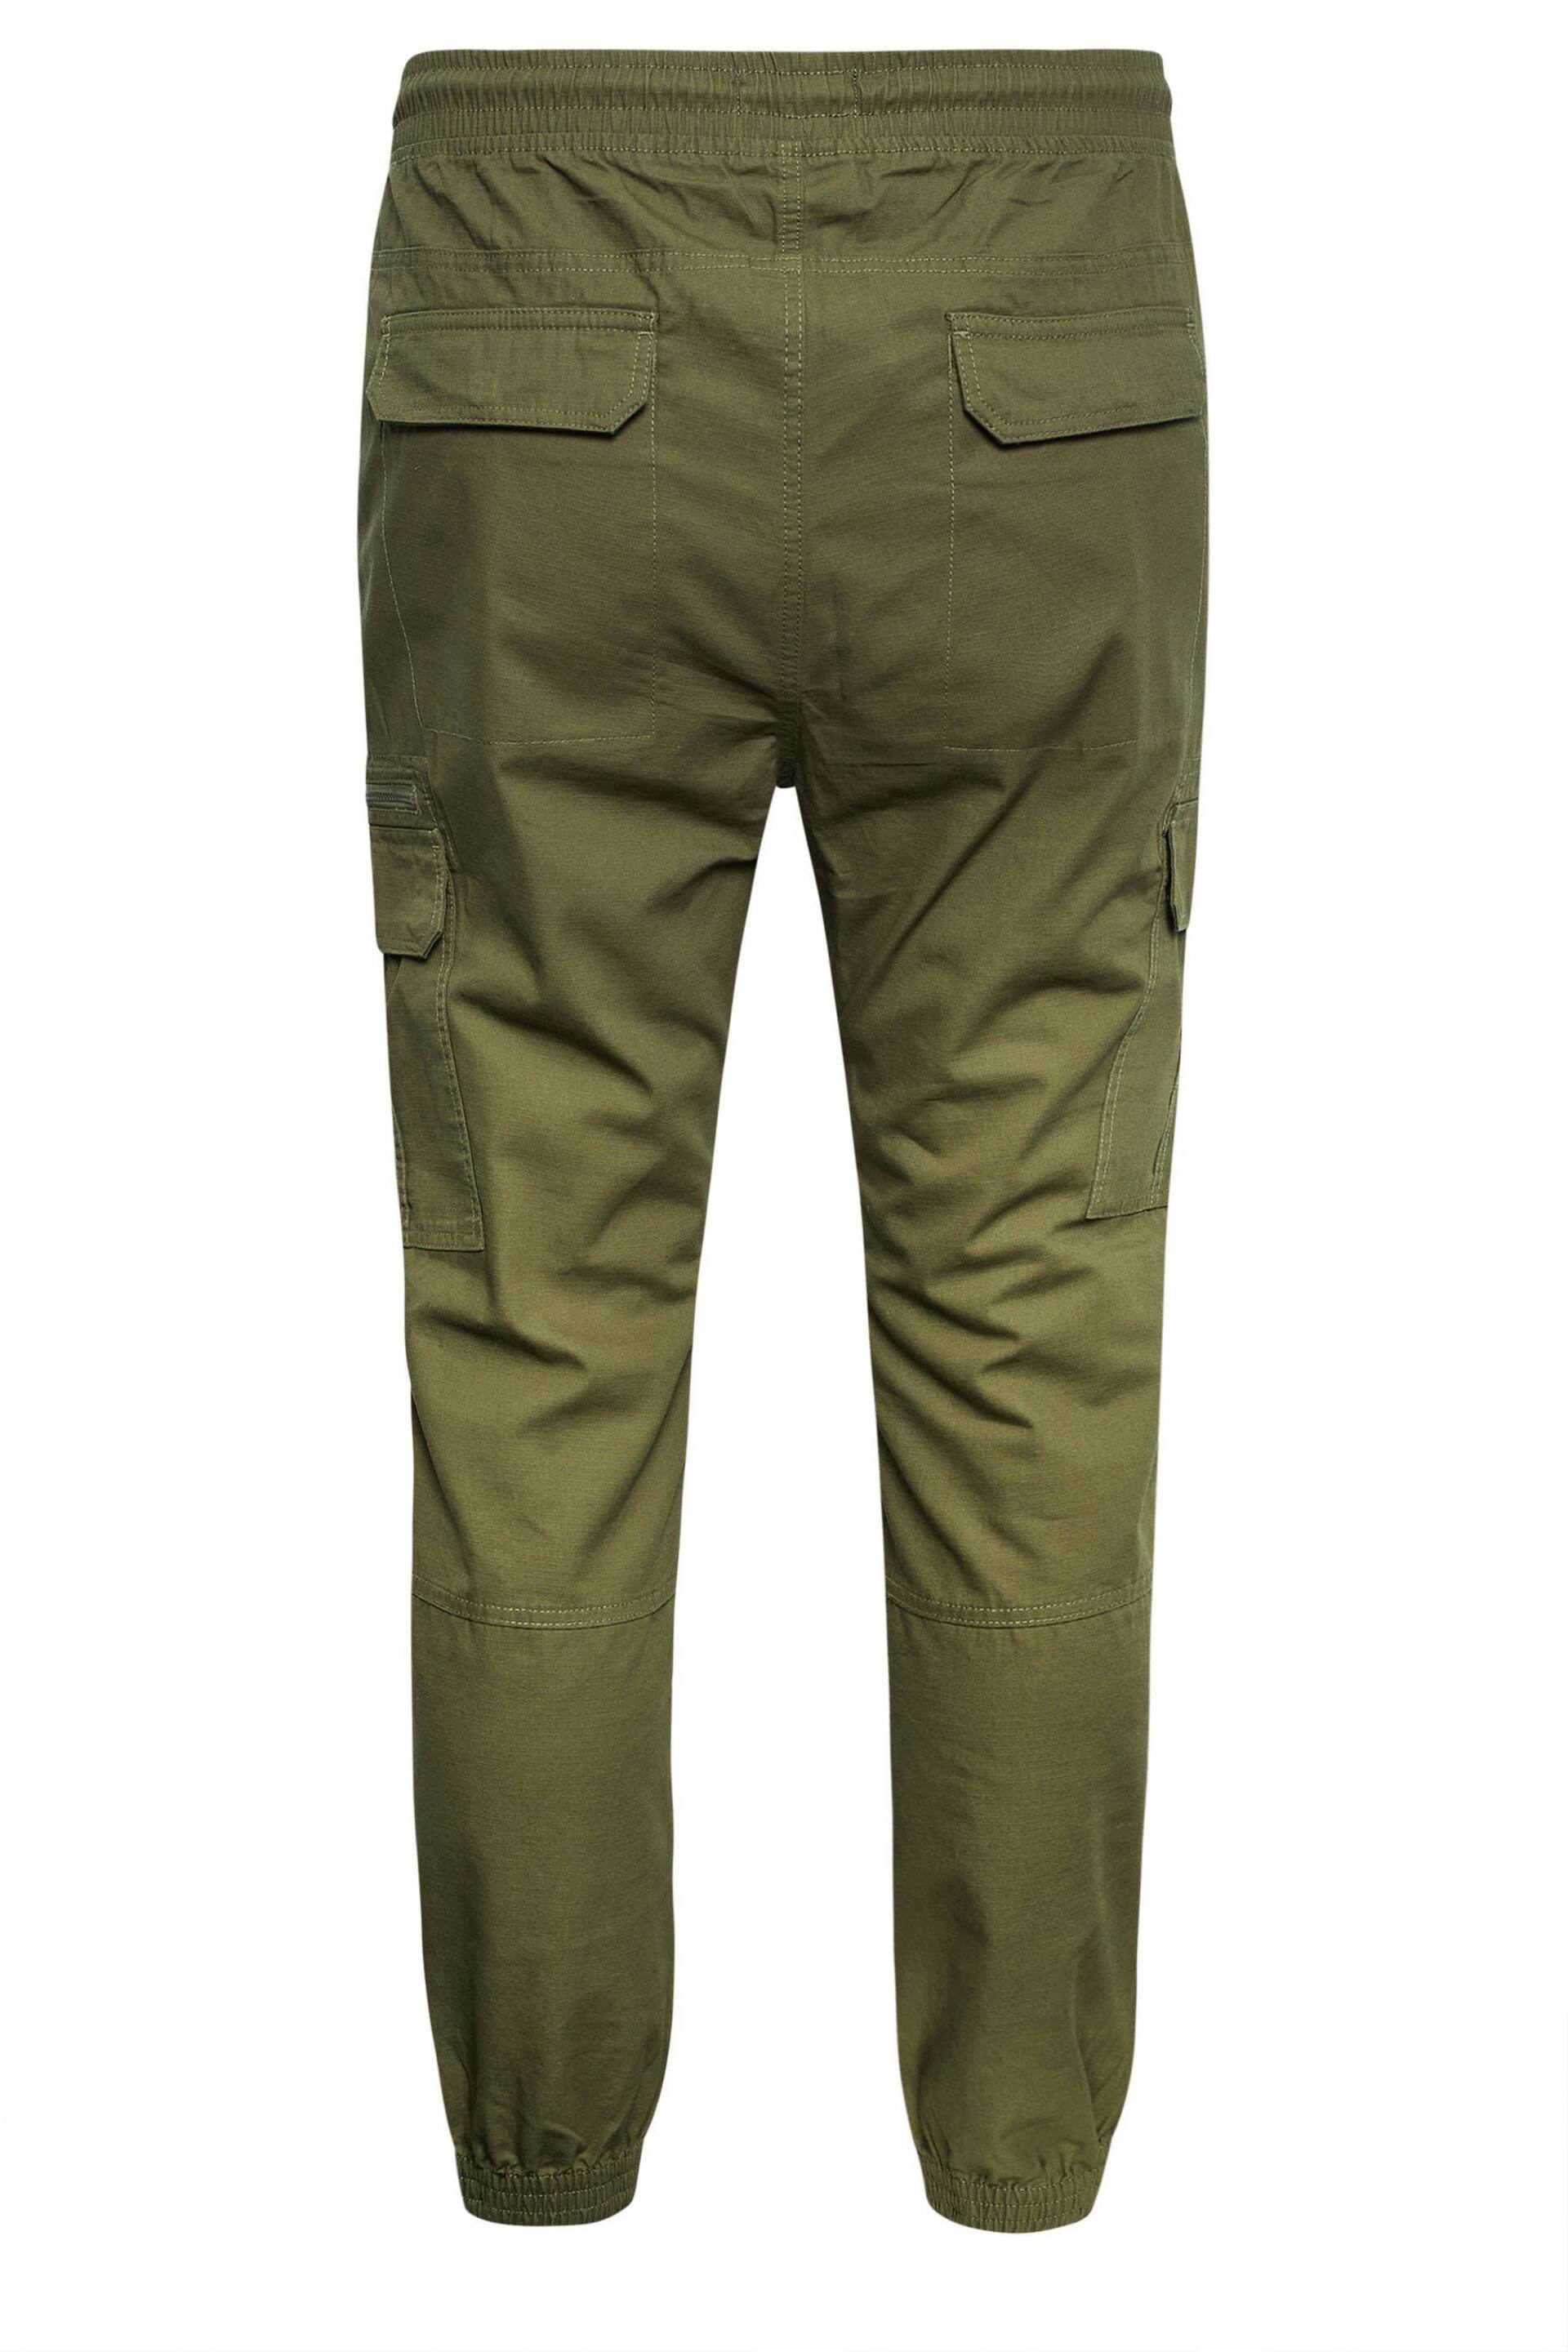 BadRhino Big & Tall Green Ripstop Cargo Trousers - Image 3 of 3